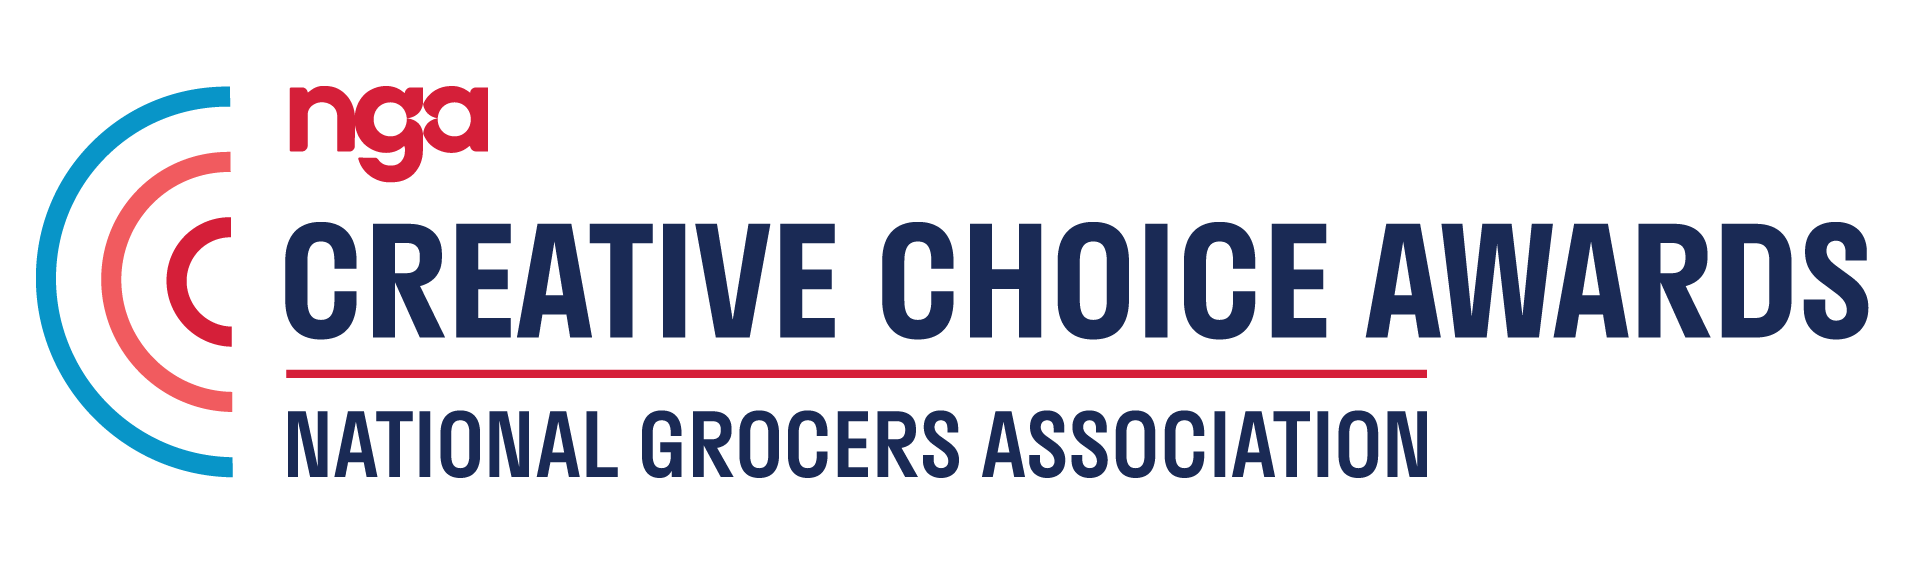 National Grocers Association Creative Choice Award | logo